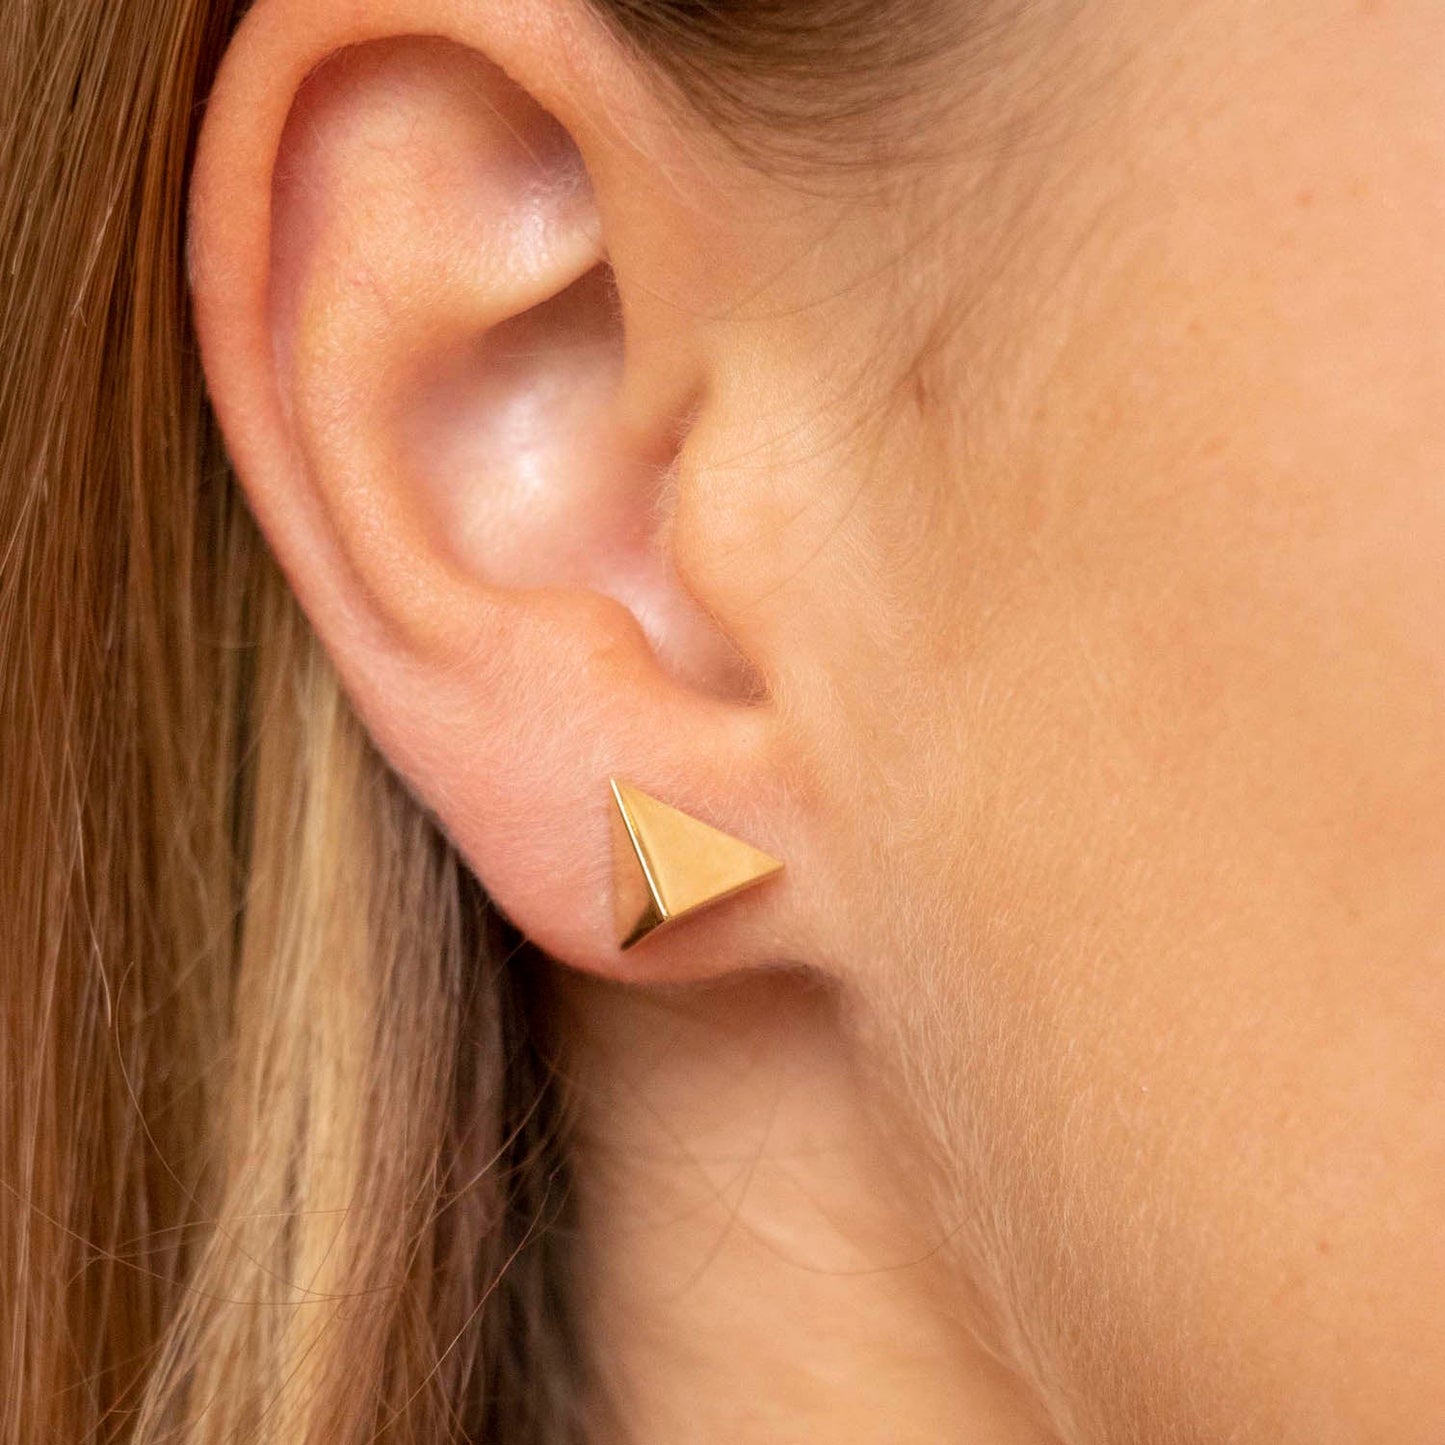 9K Yellow Gold 10mm x 8.5mm Elongated Pyramid Stud Earrings